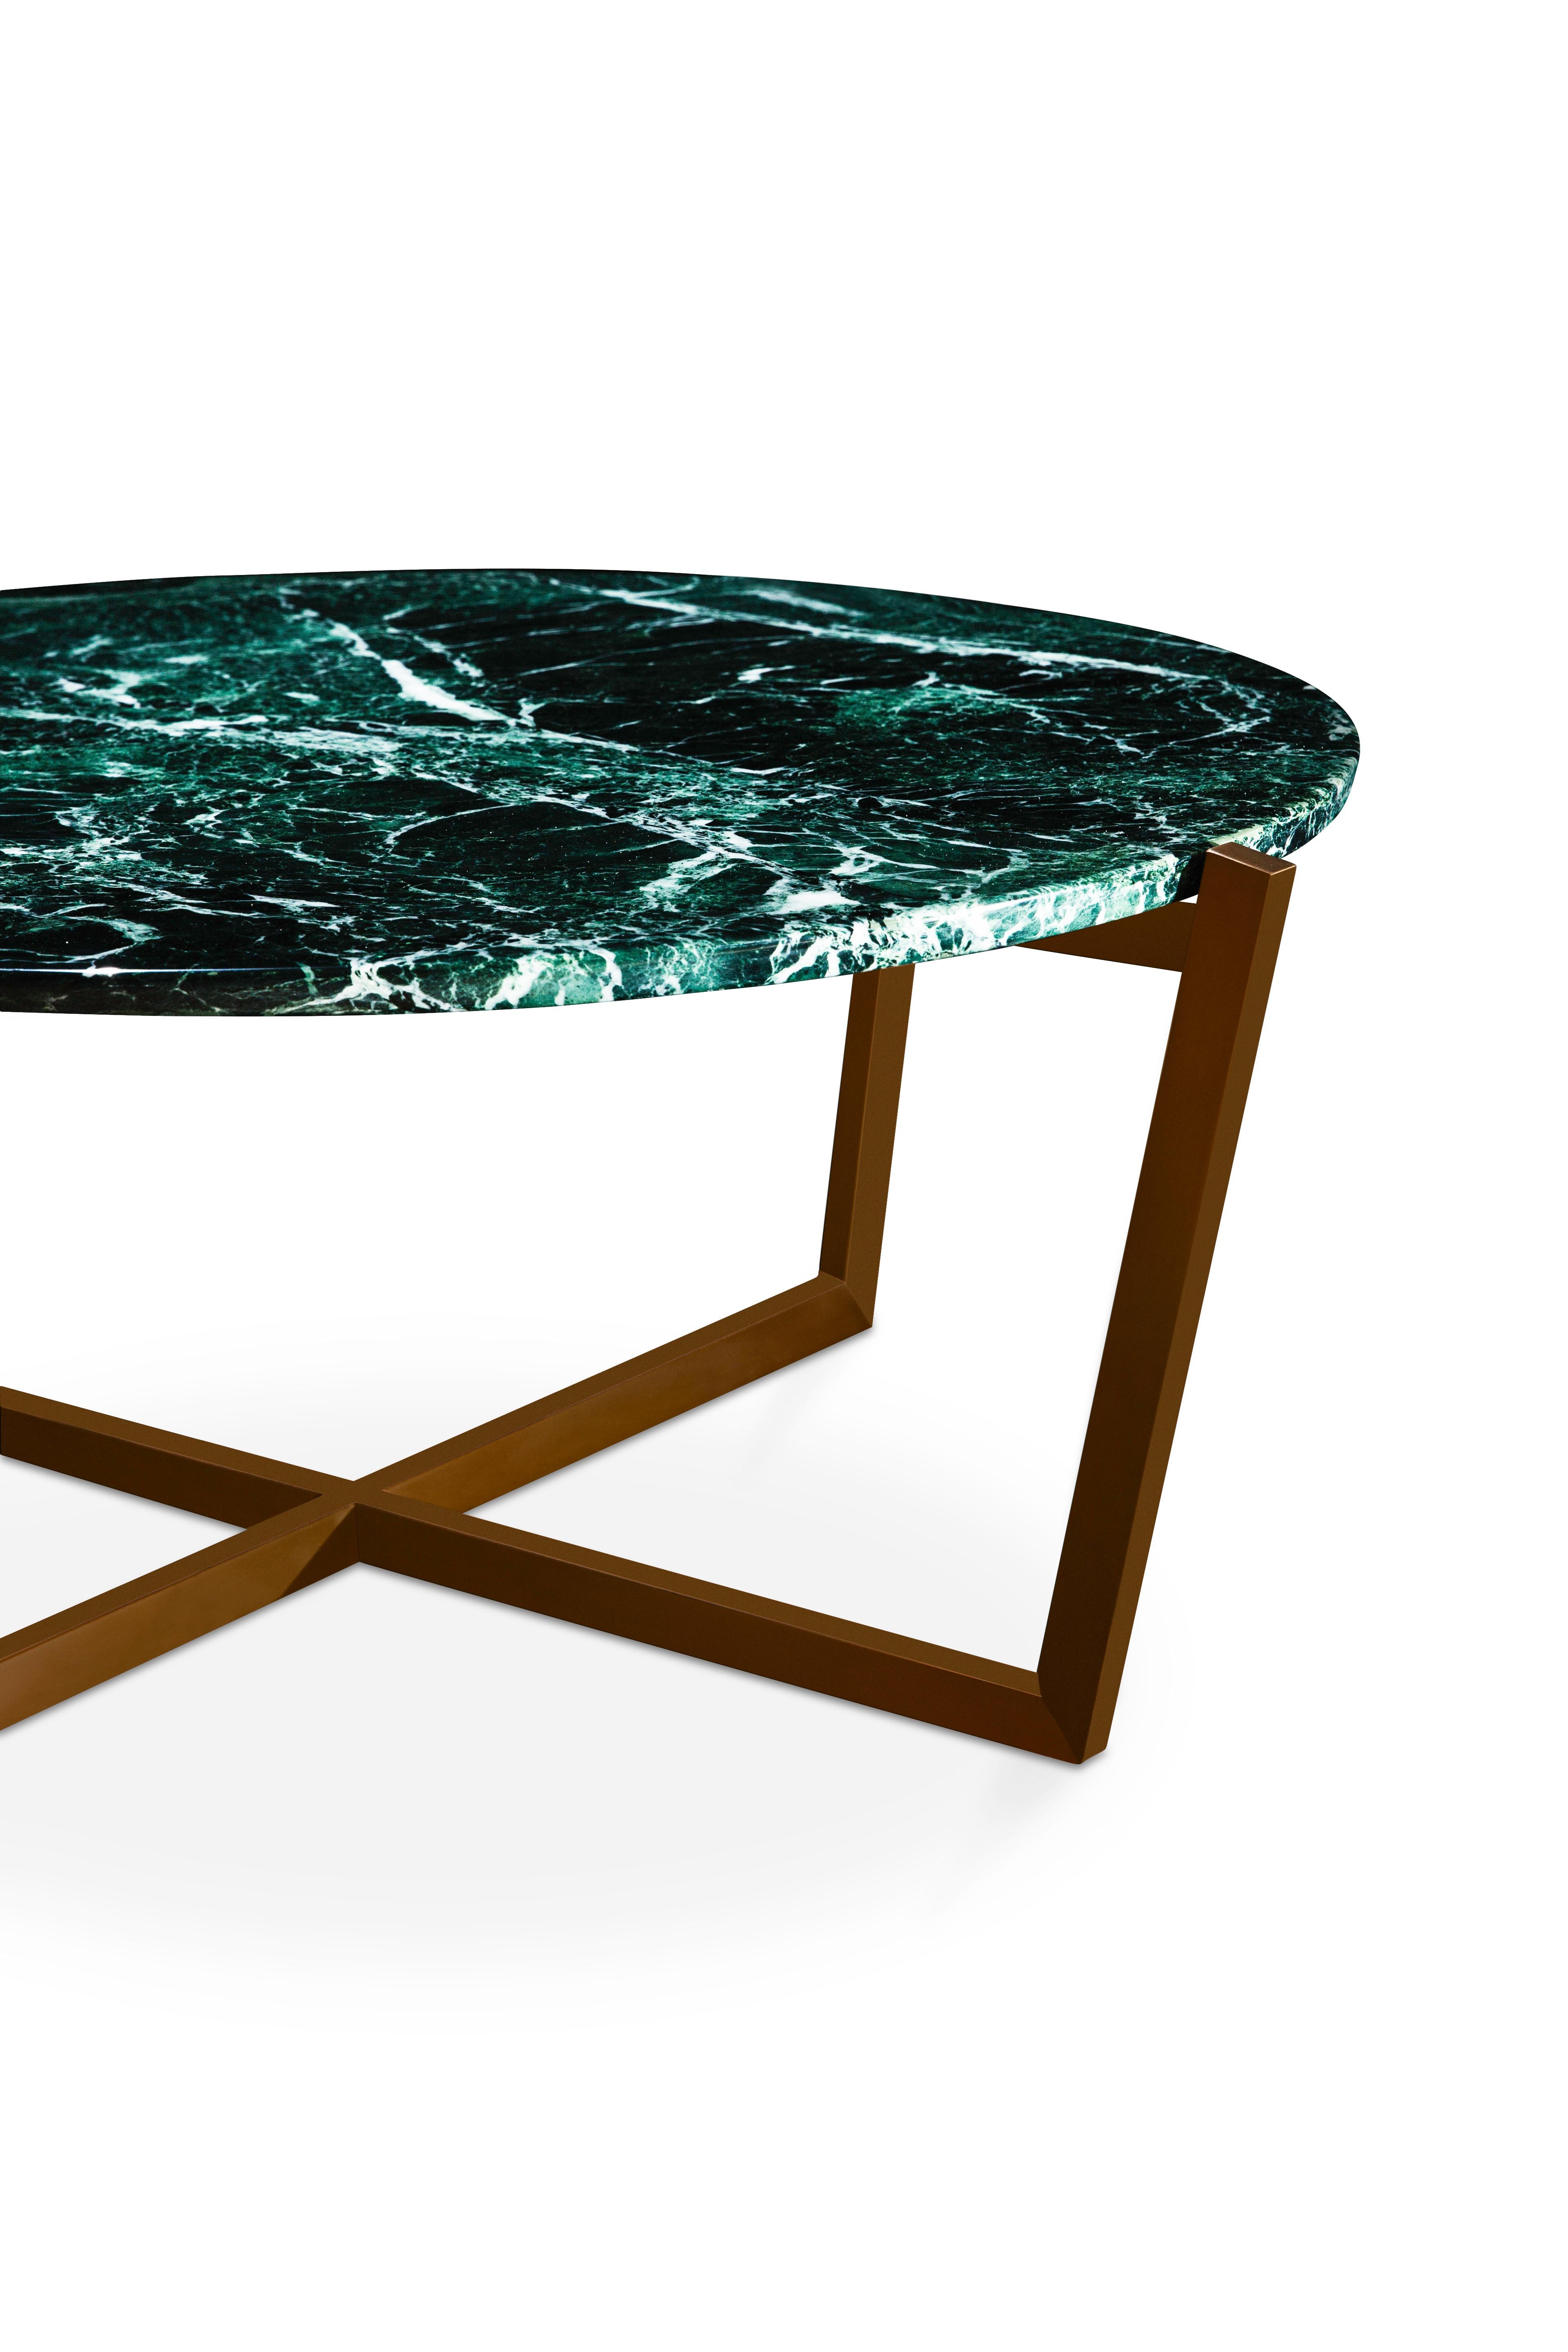 Polished NORDST EMMA Coffee Table, Italian Grey Rain Marble, Danish Modern Design, New For Sale